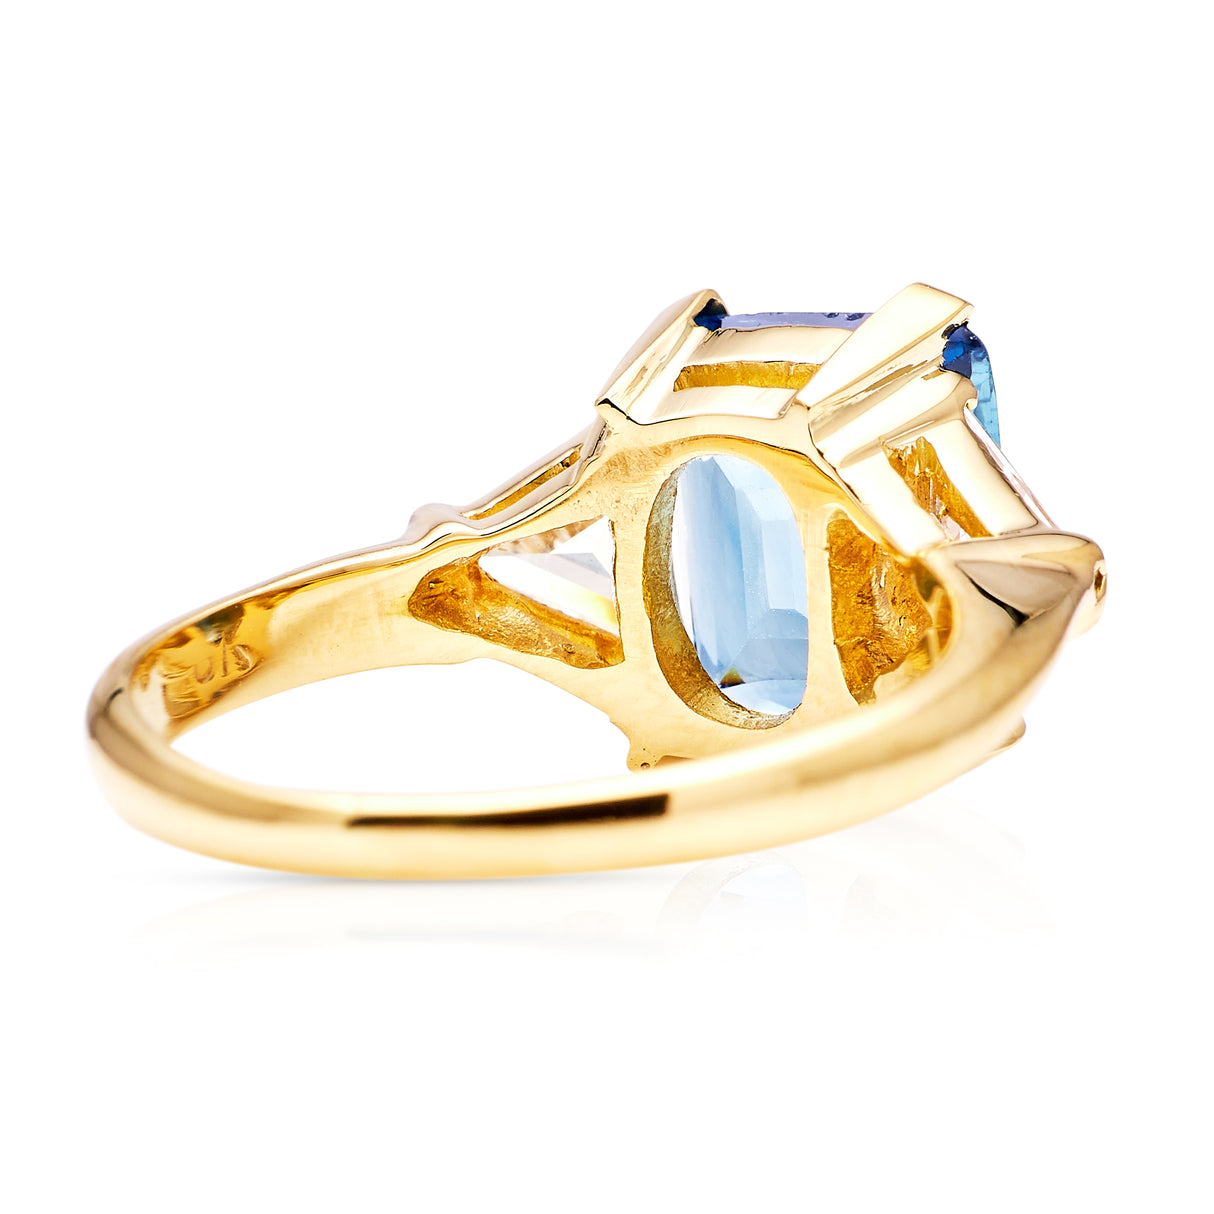 Vintage, blue sapphire and trilliant-cut diamond three stone ring